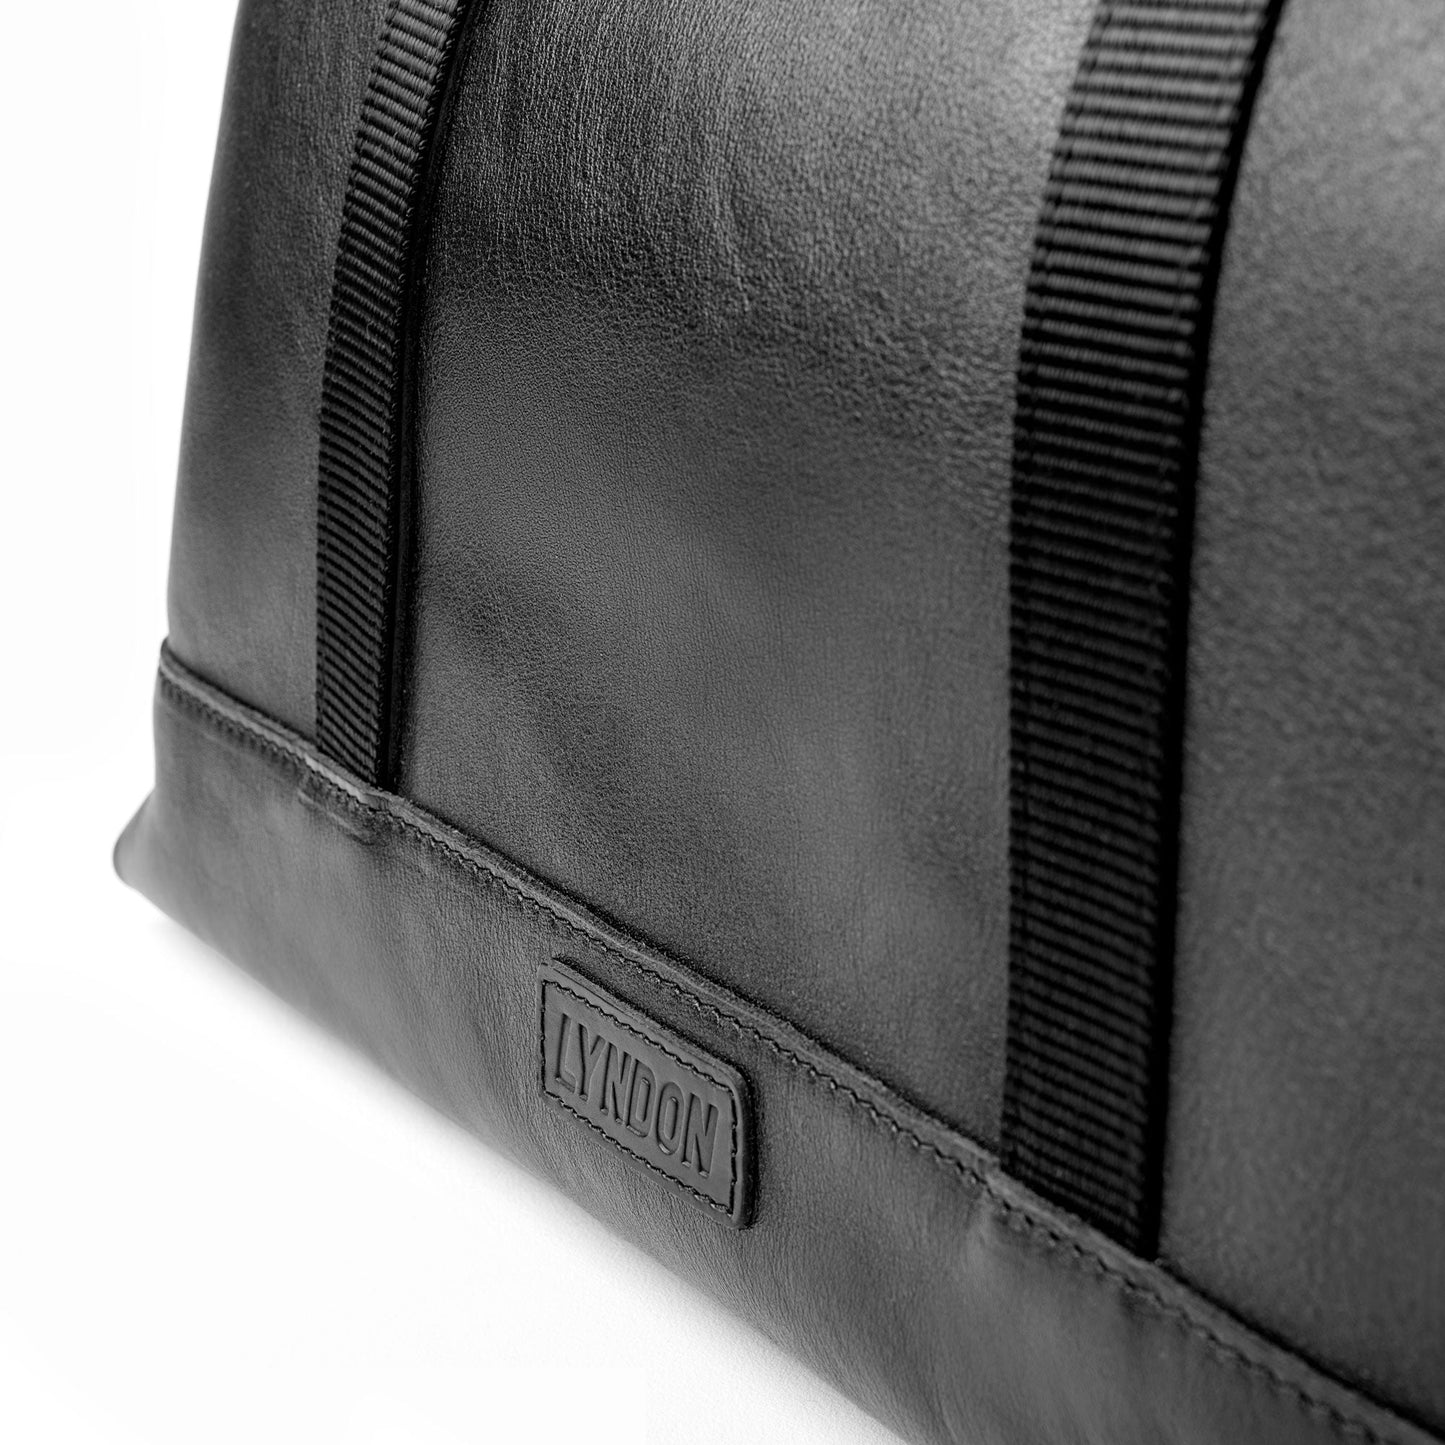 leather duffel bag travel bag